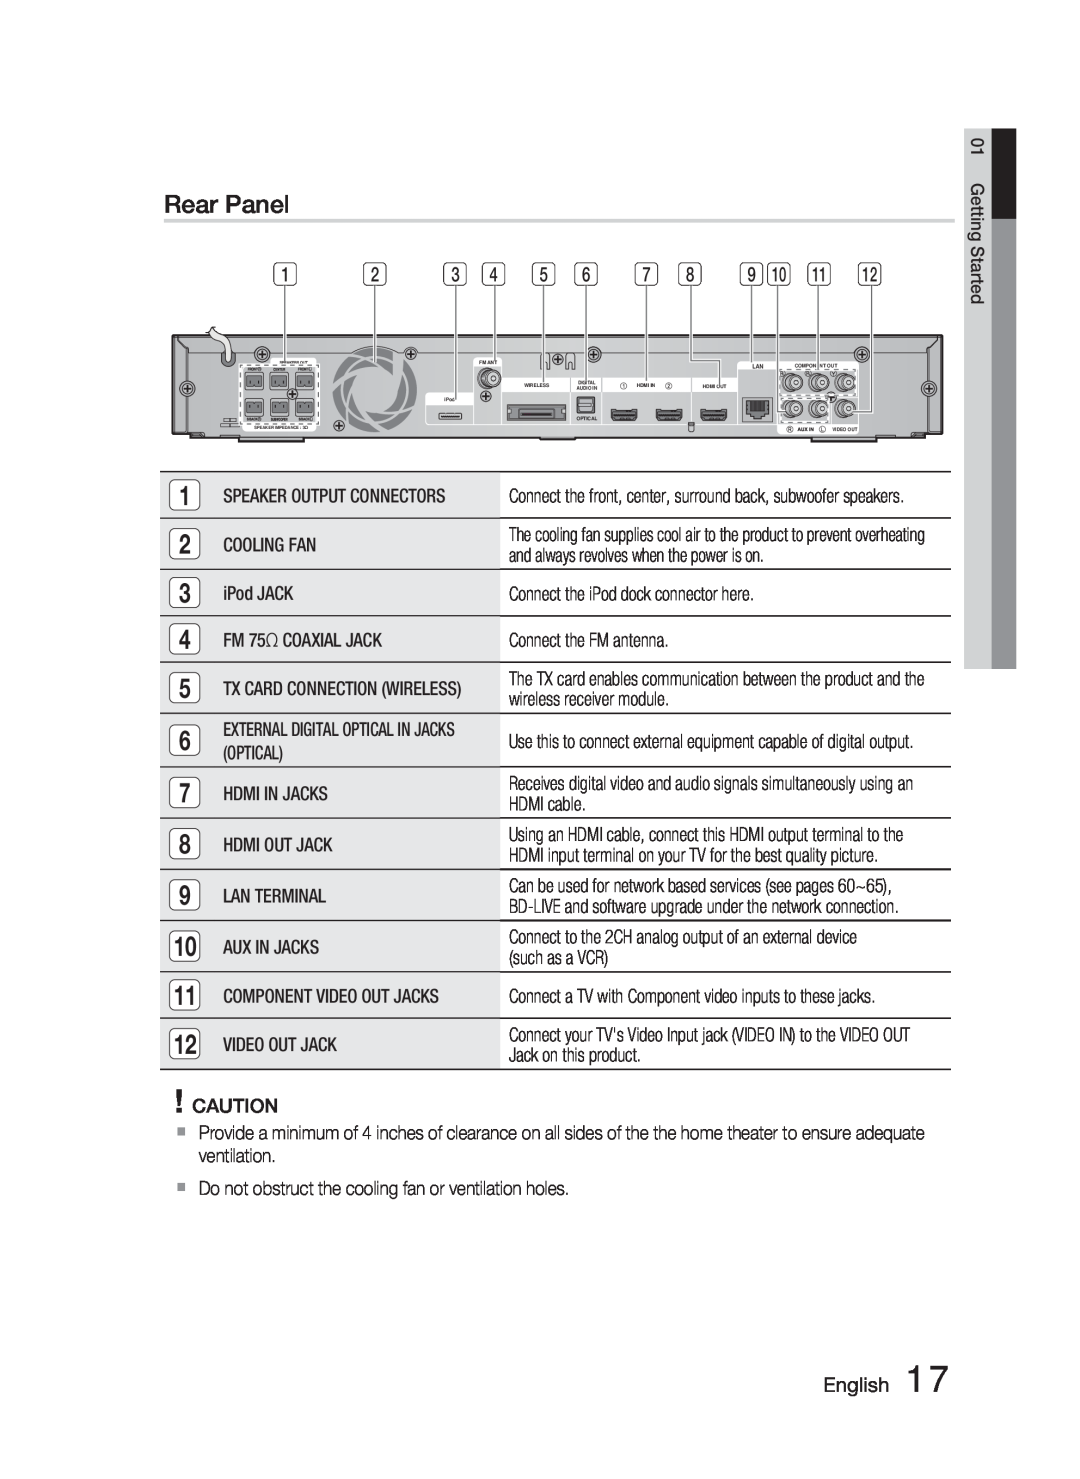 Samsung AH68-02279Y user manual Rear Panel, English 